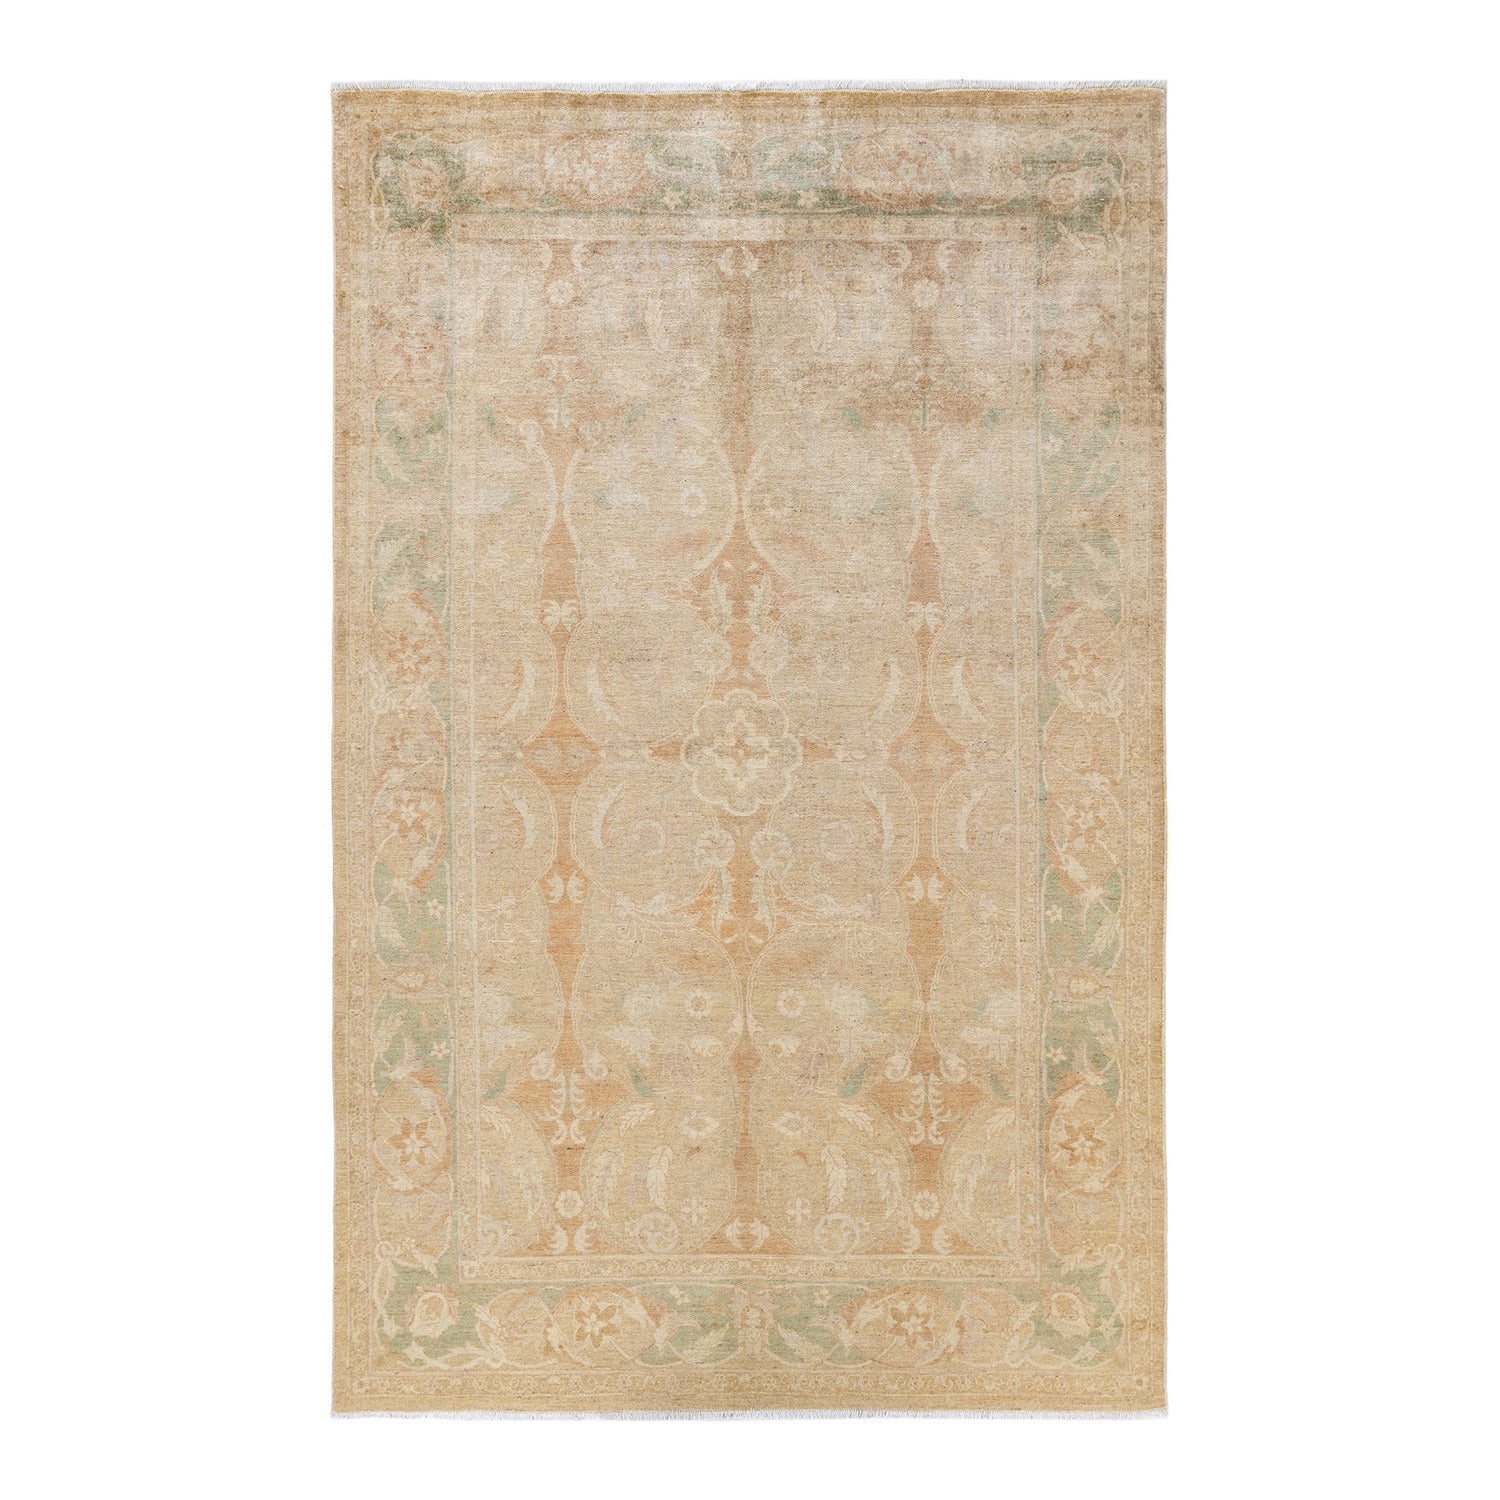 Elegant rectangular floor rug featuring intricate floral and vine motifs.